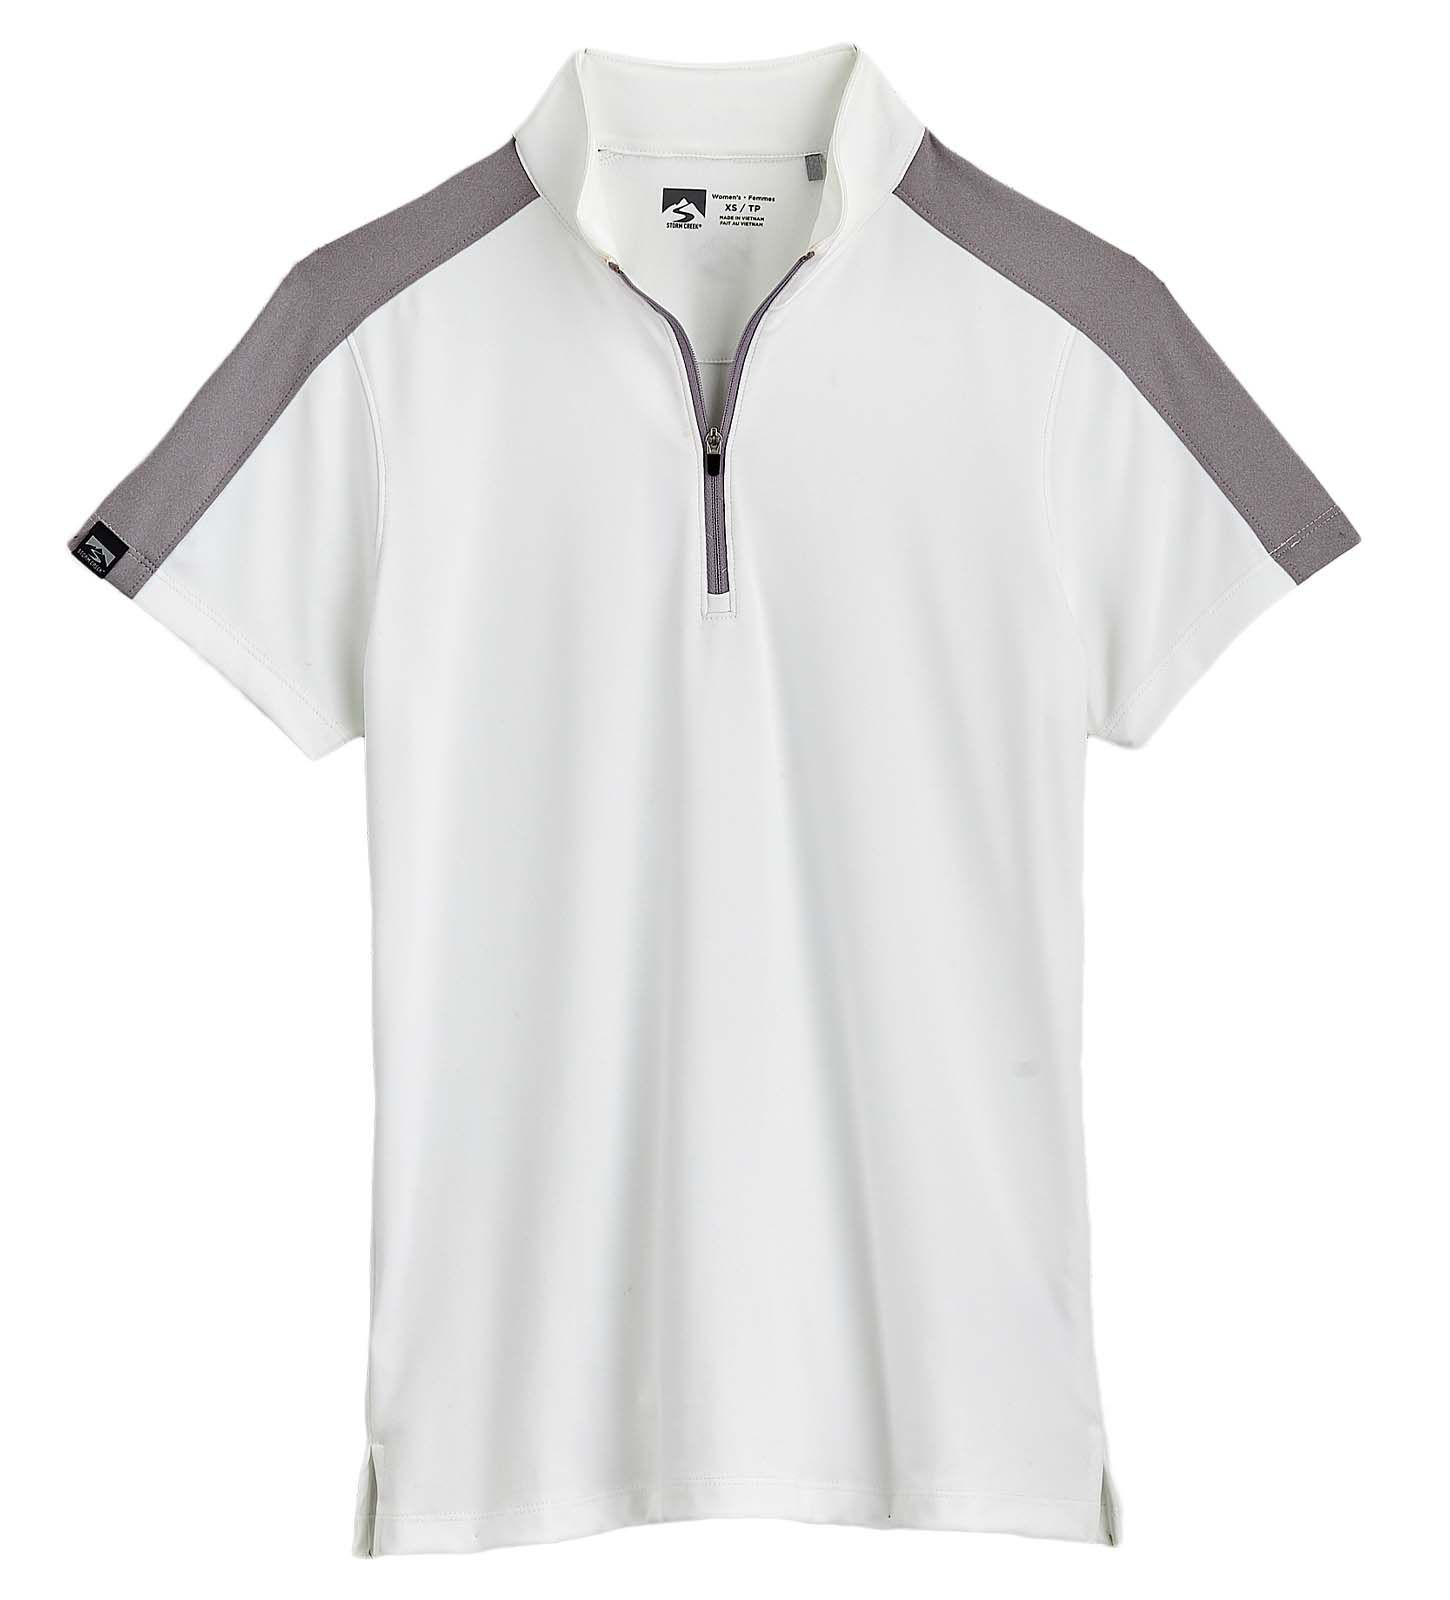 Storm Creek Activator Short-Sleeve Polo Shirt for Ladies - Dark Heather Gray/Black - White/Light Heather Gray - S